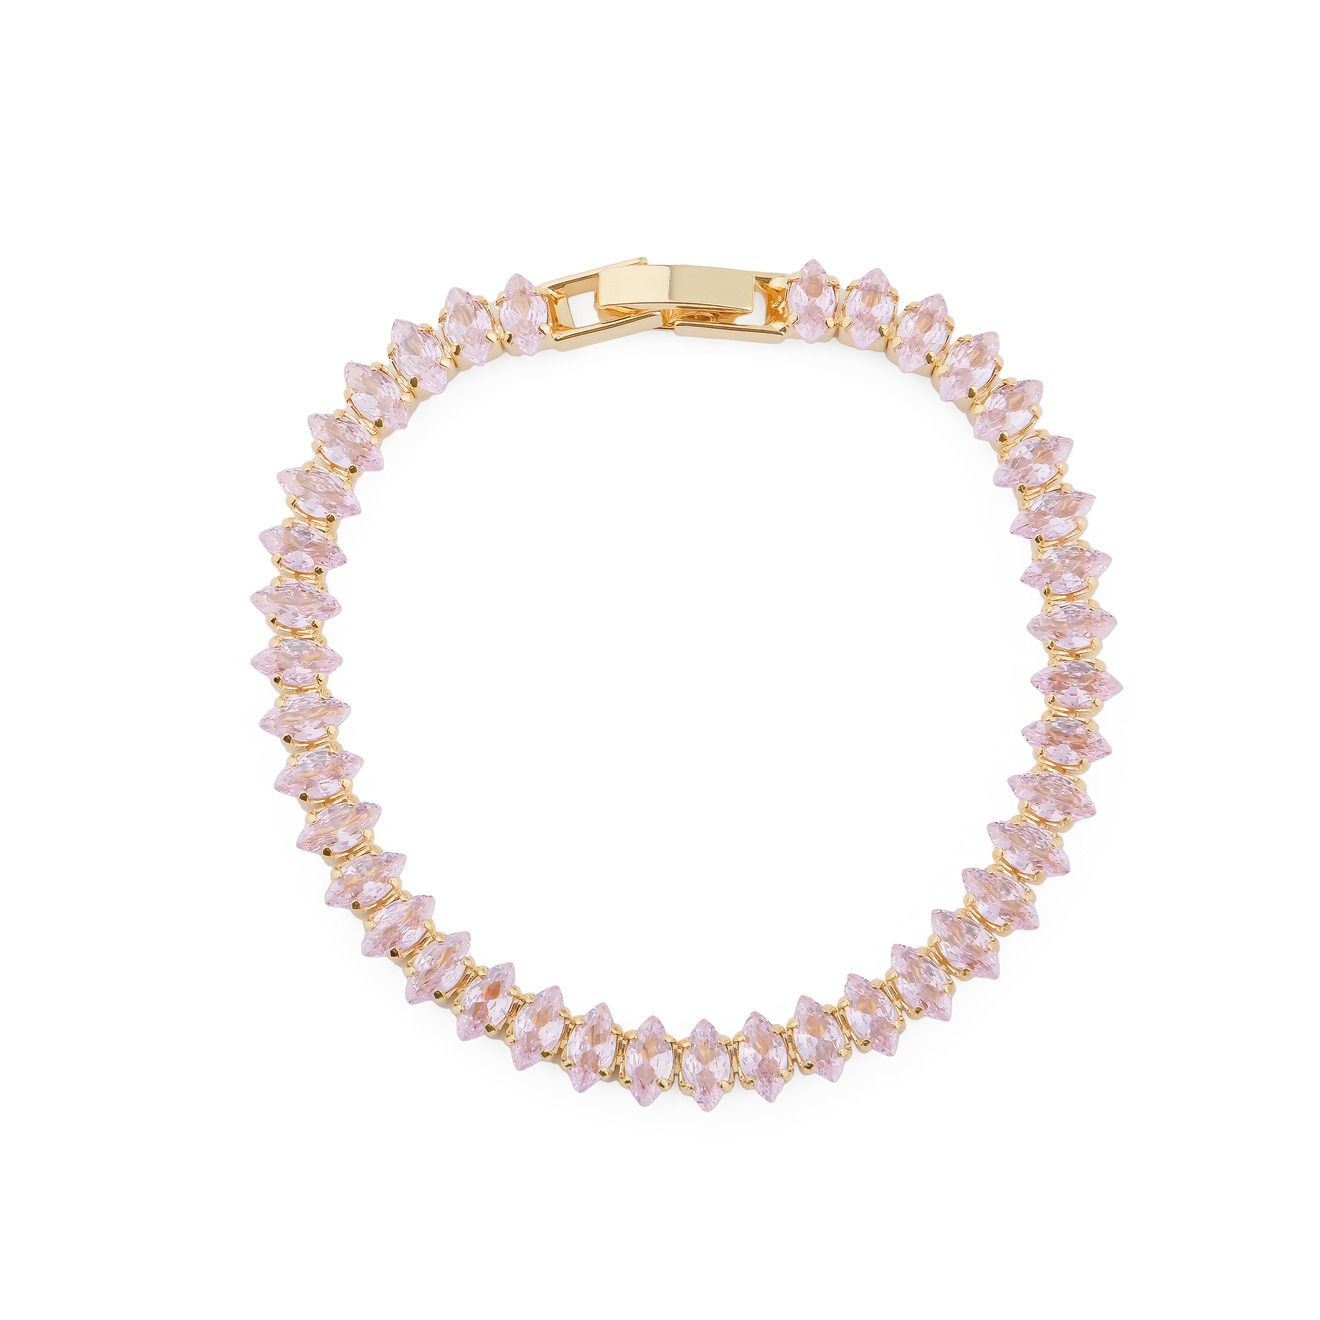 Herald Percy Браслет с розовыми кристаллами herald percy серебристое кольцо из сердец с белыми и розовыми кристаллами